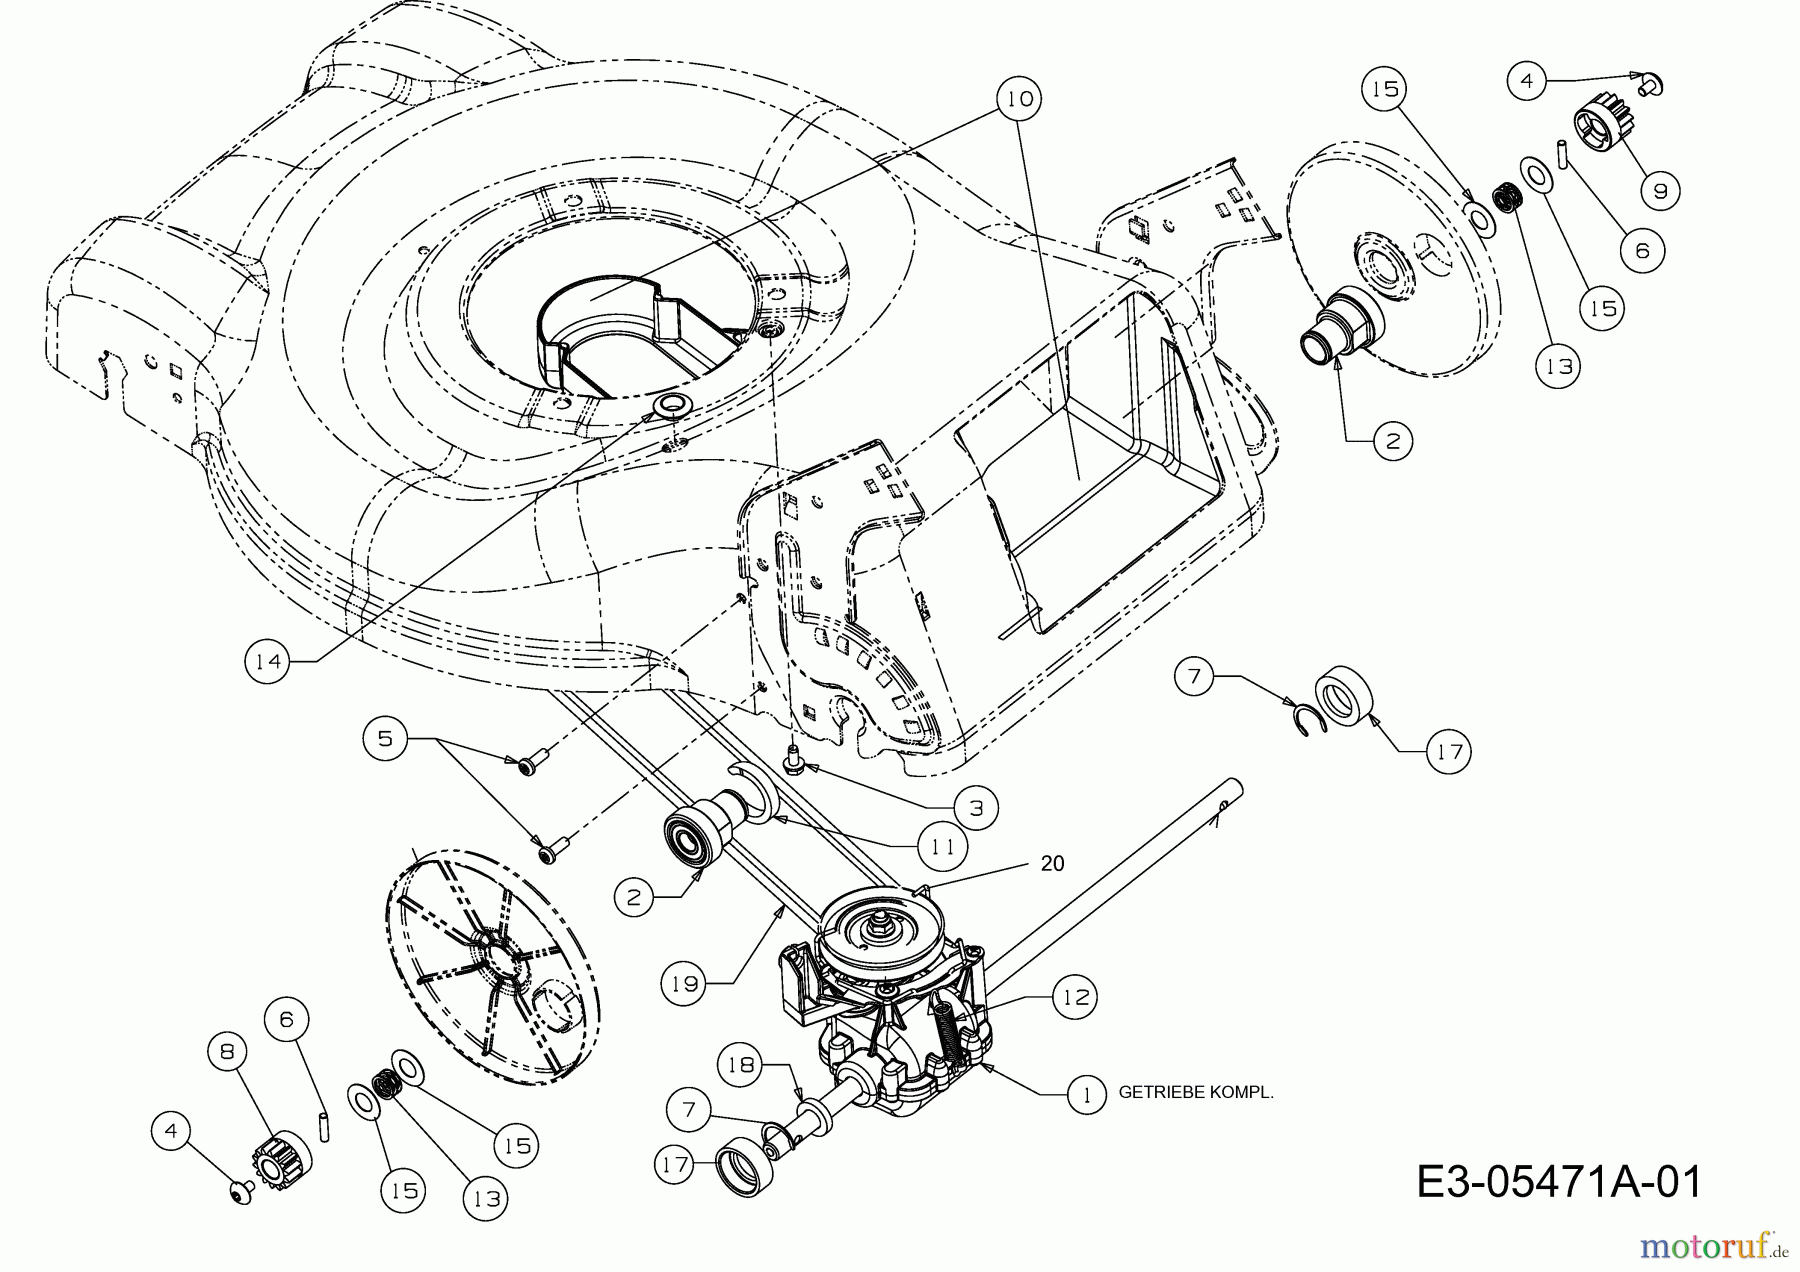  MTD Motormäher mit Antrieb GL 46 SPO 12E-J5M2676  (2011) Getriebe